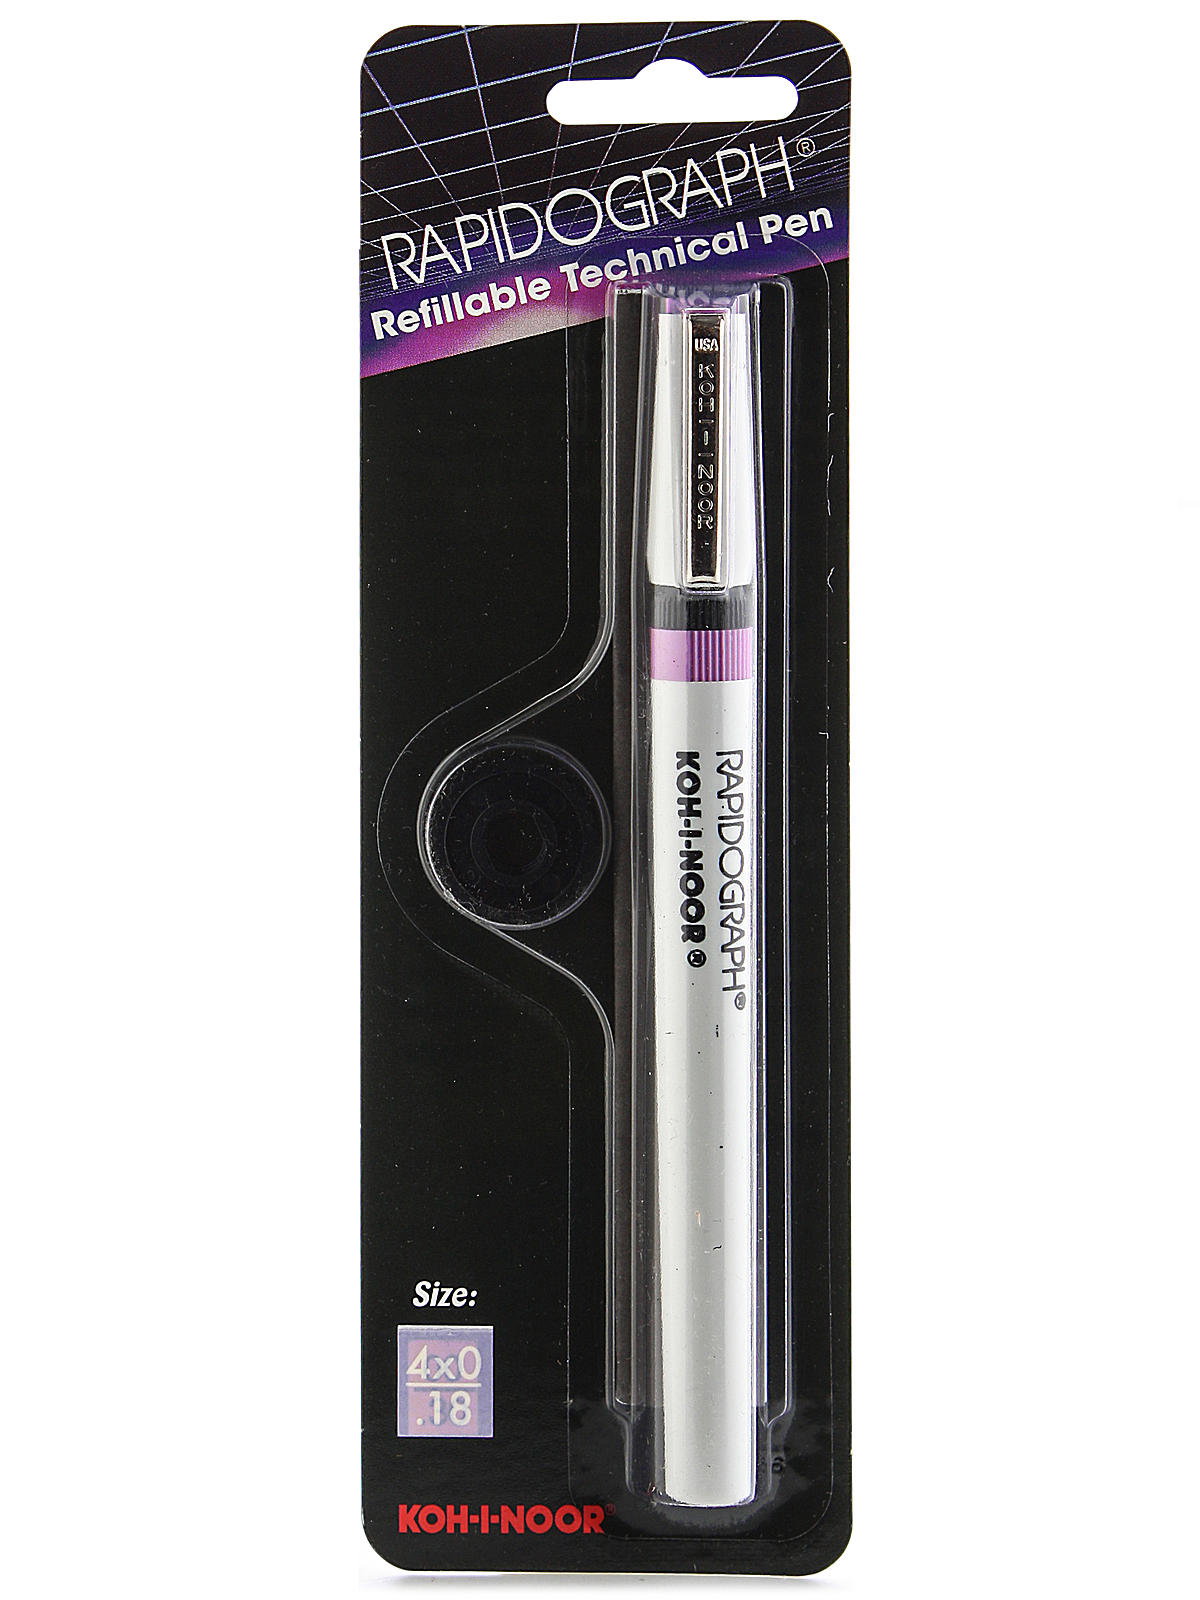 Rapidograph Technical 7 Pen Set